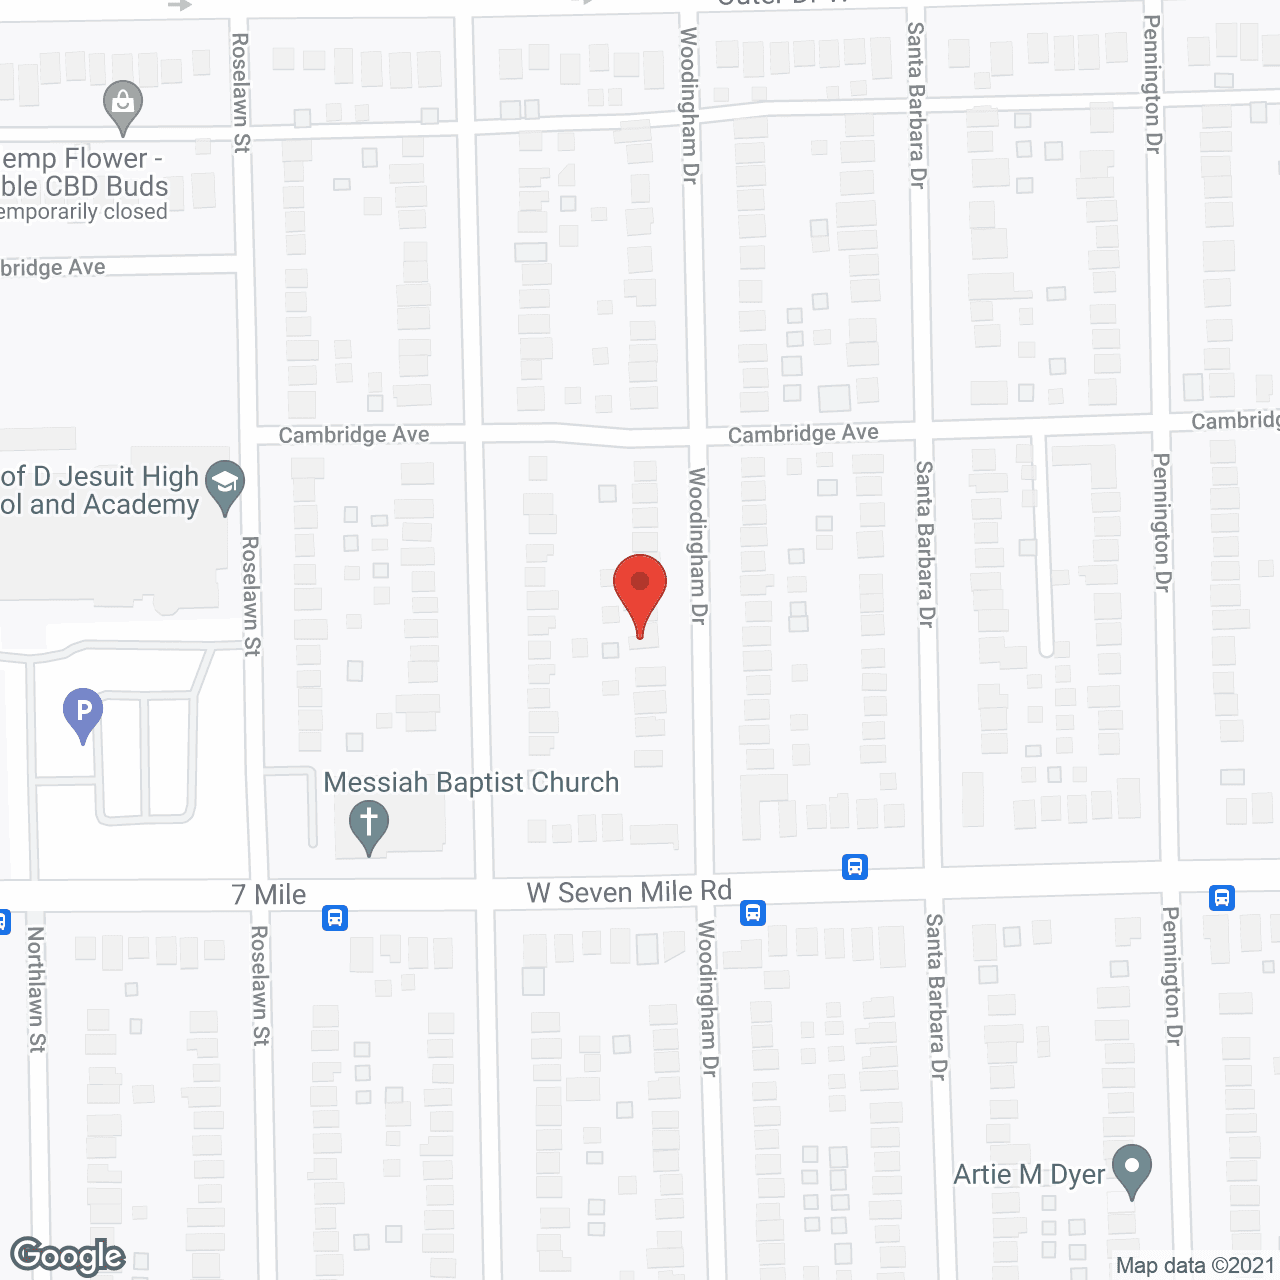 Alternative Adult Residence in google map